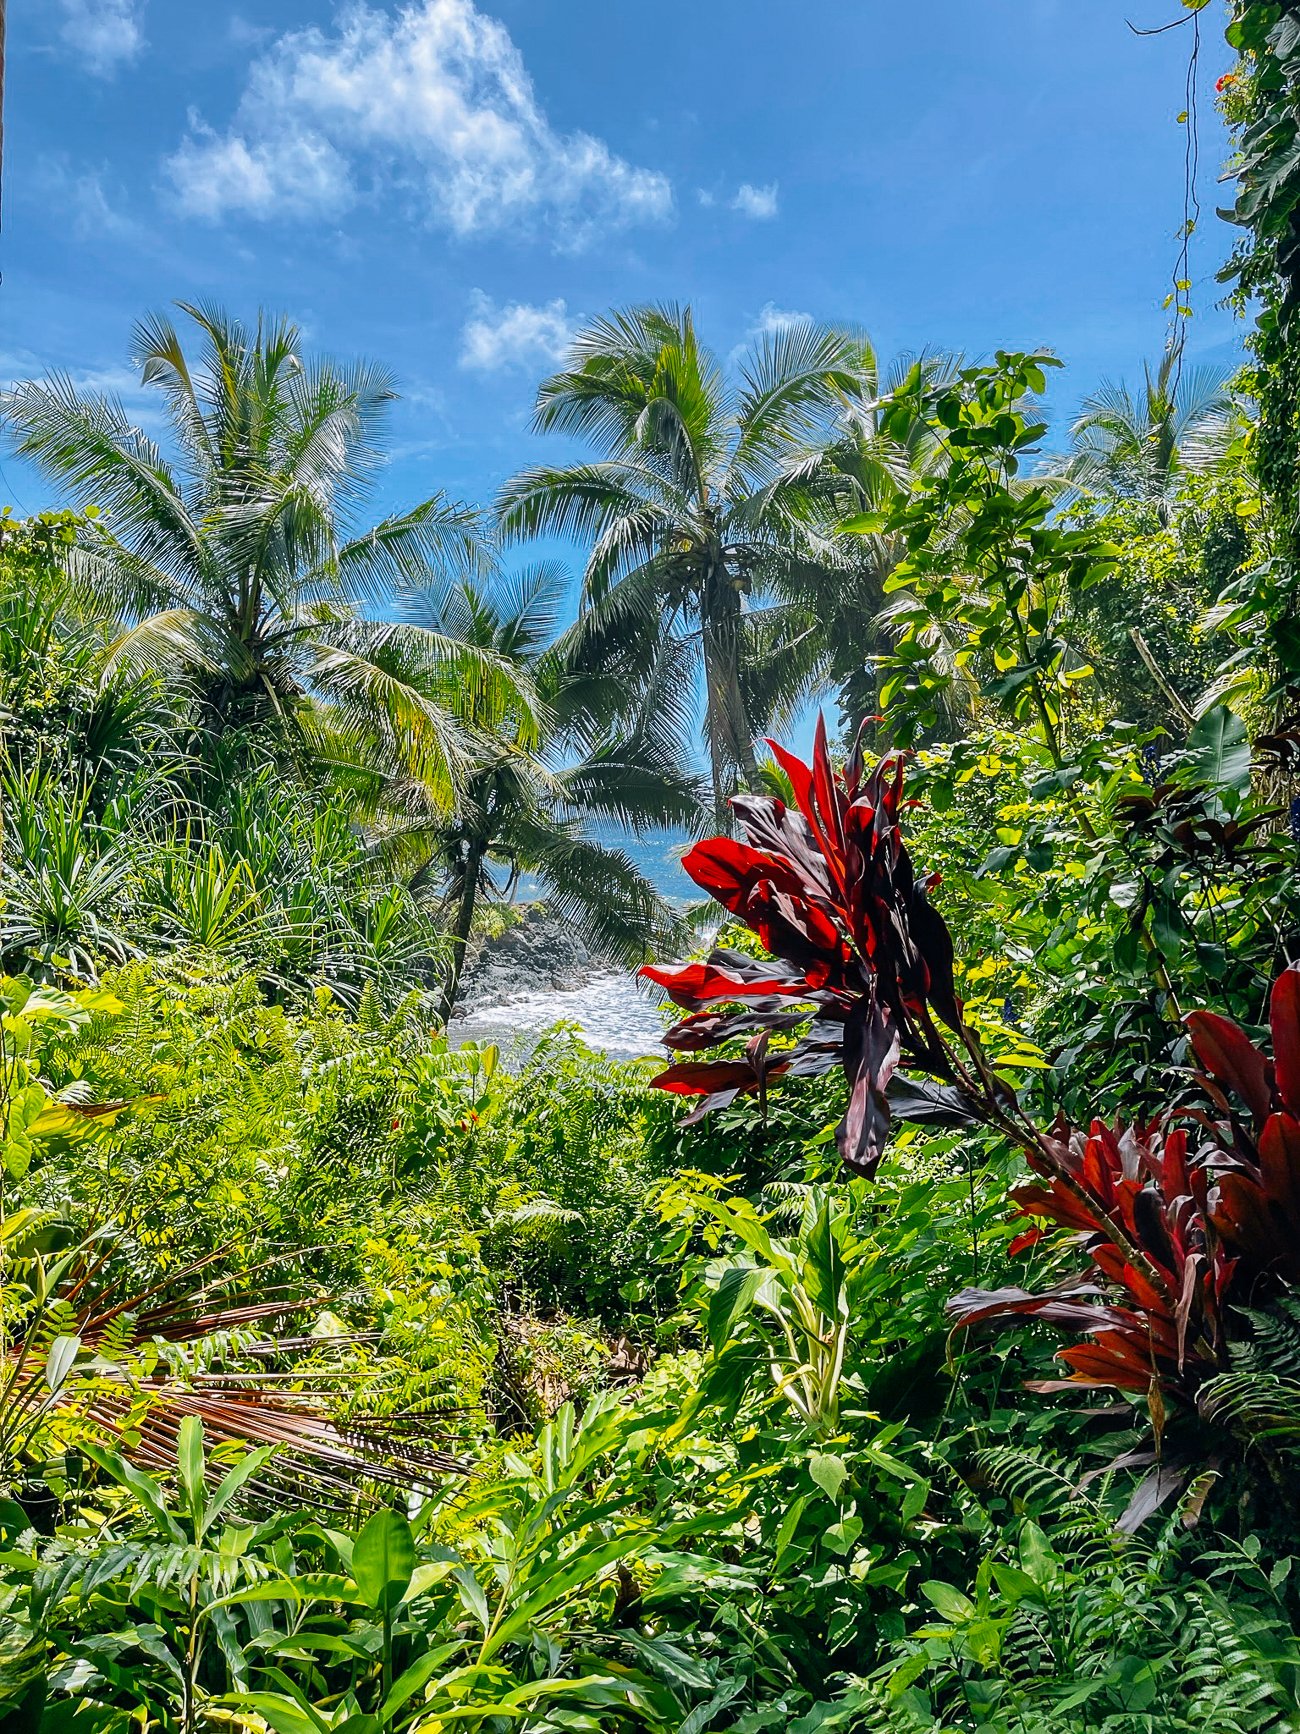 View of ocean through tropical plants